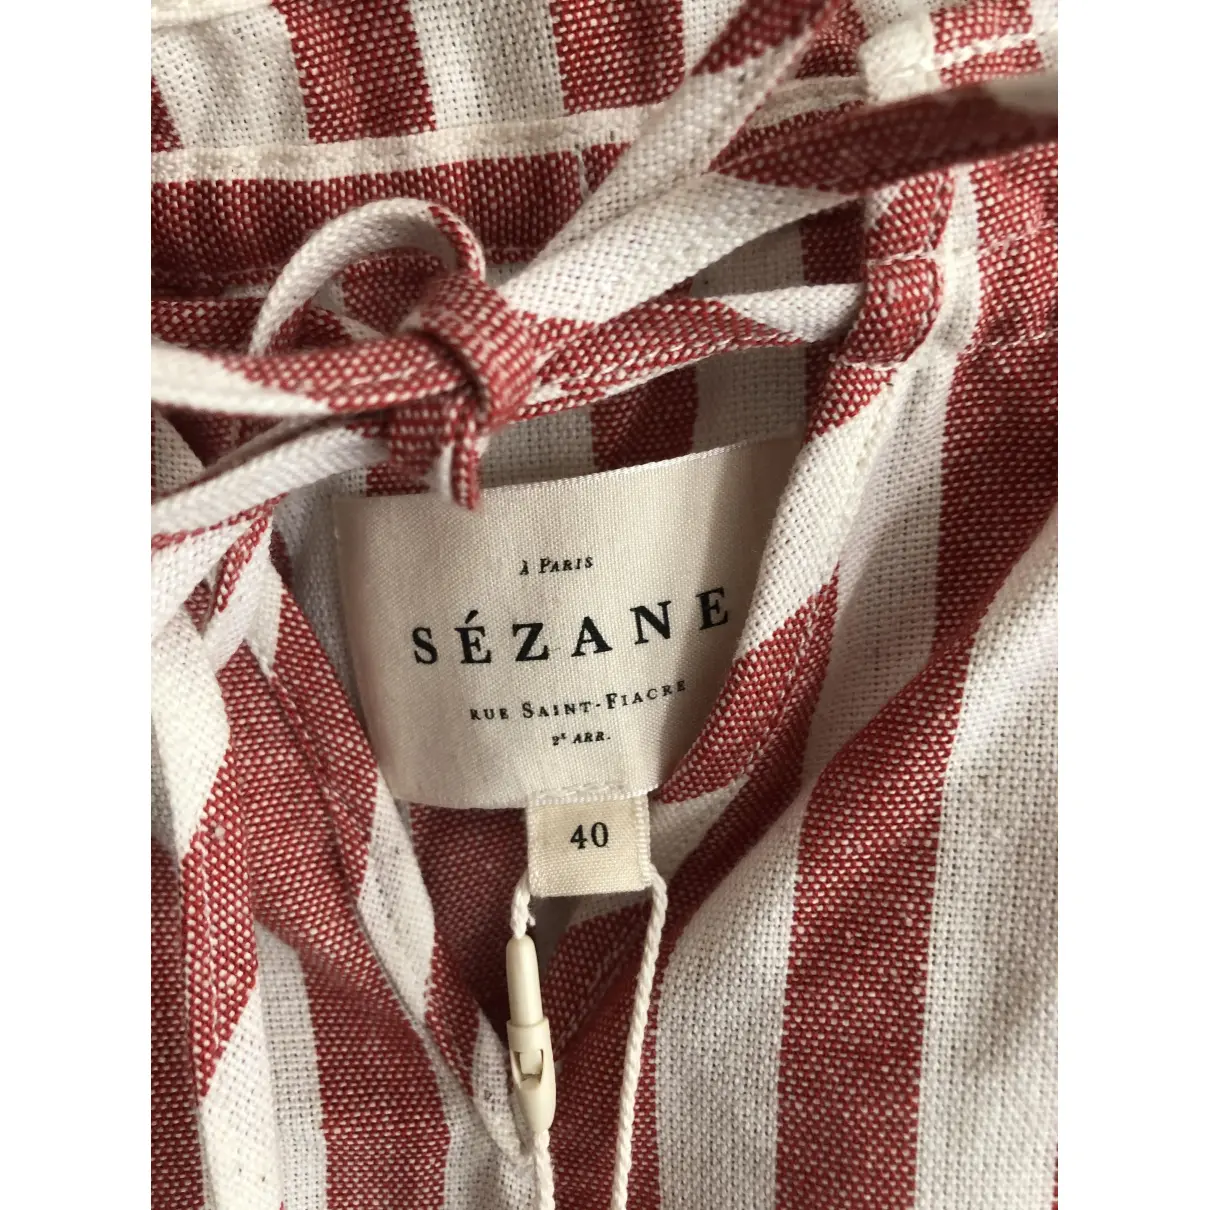 Buy Sézane Spring Summer 2020 mini dress online